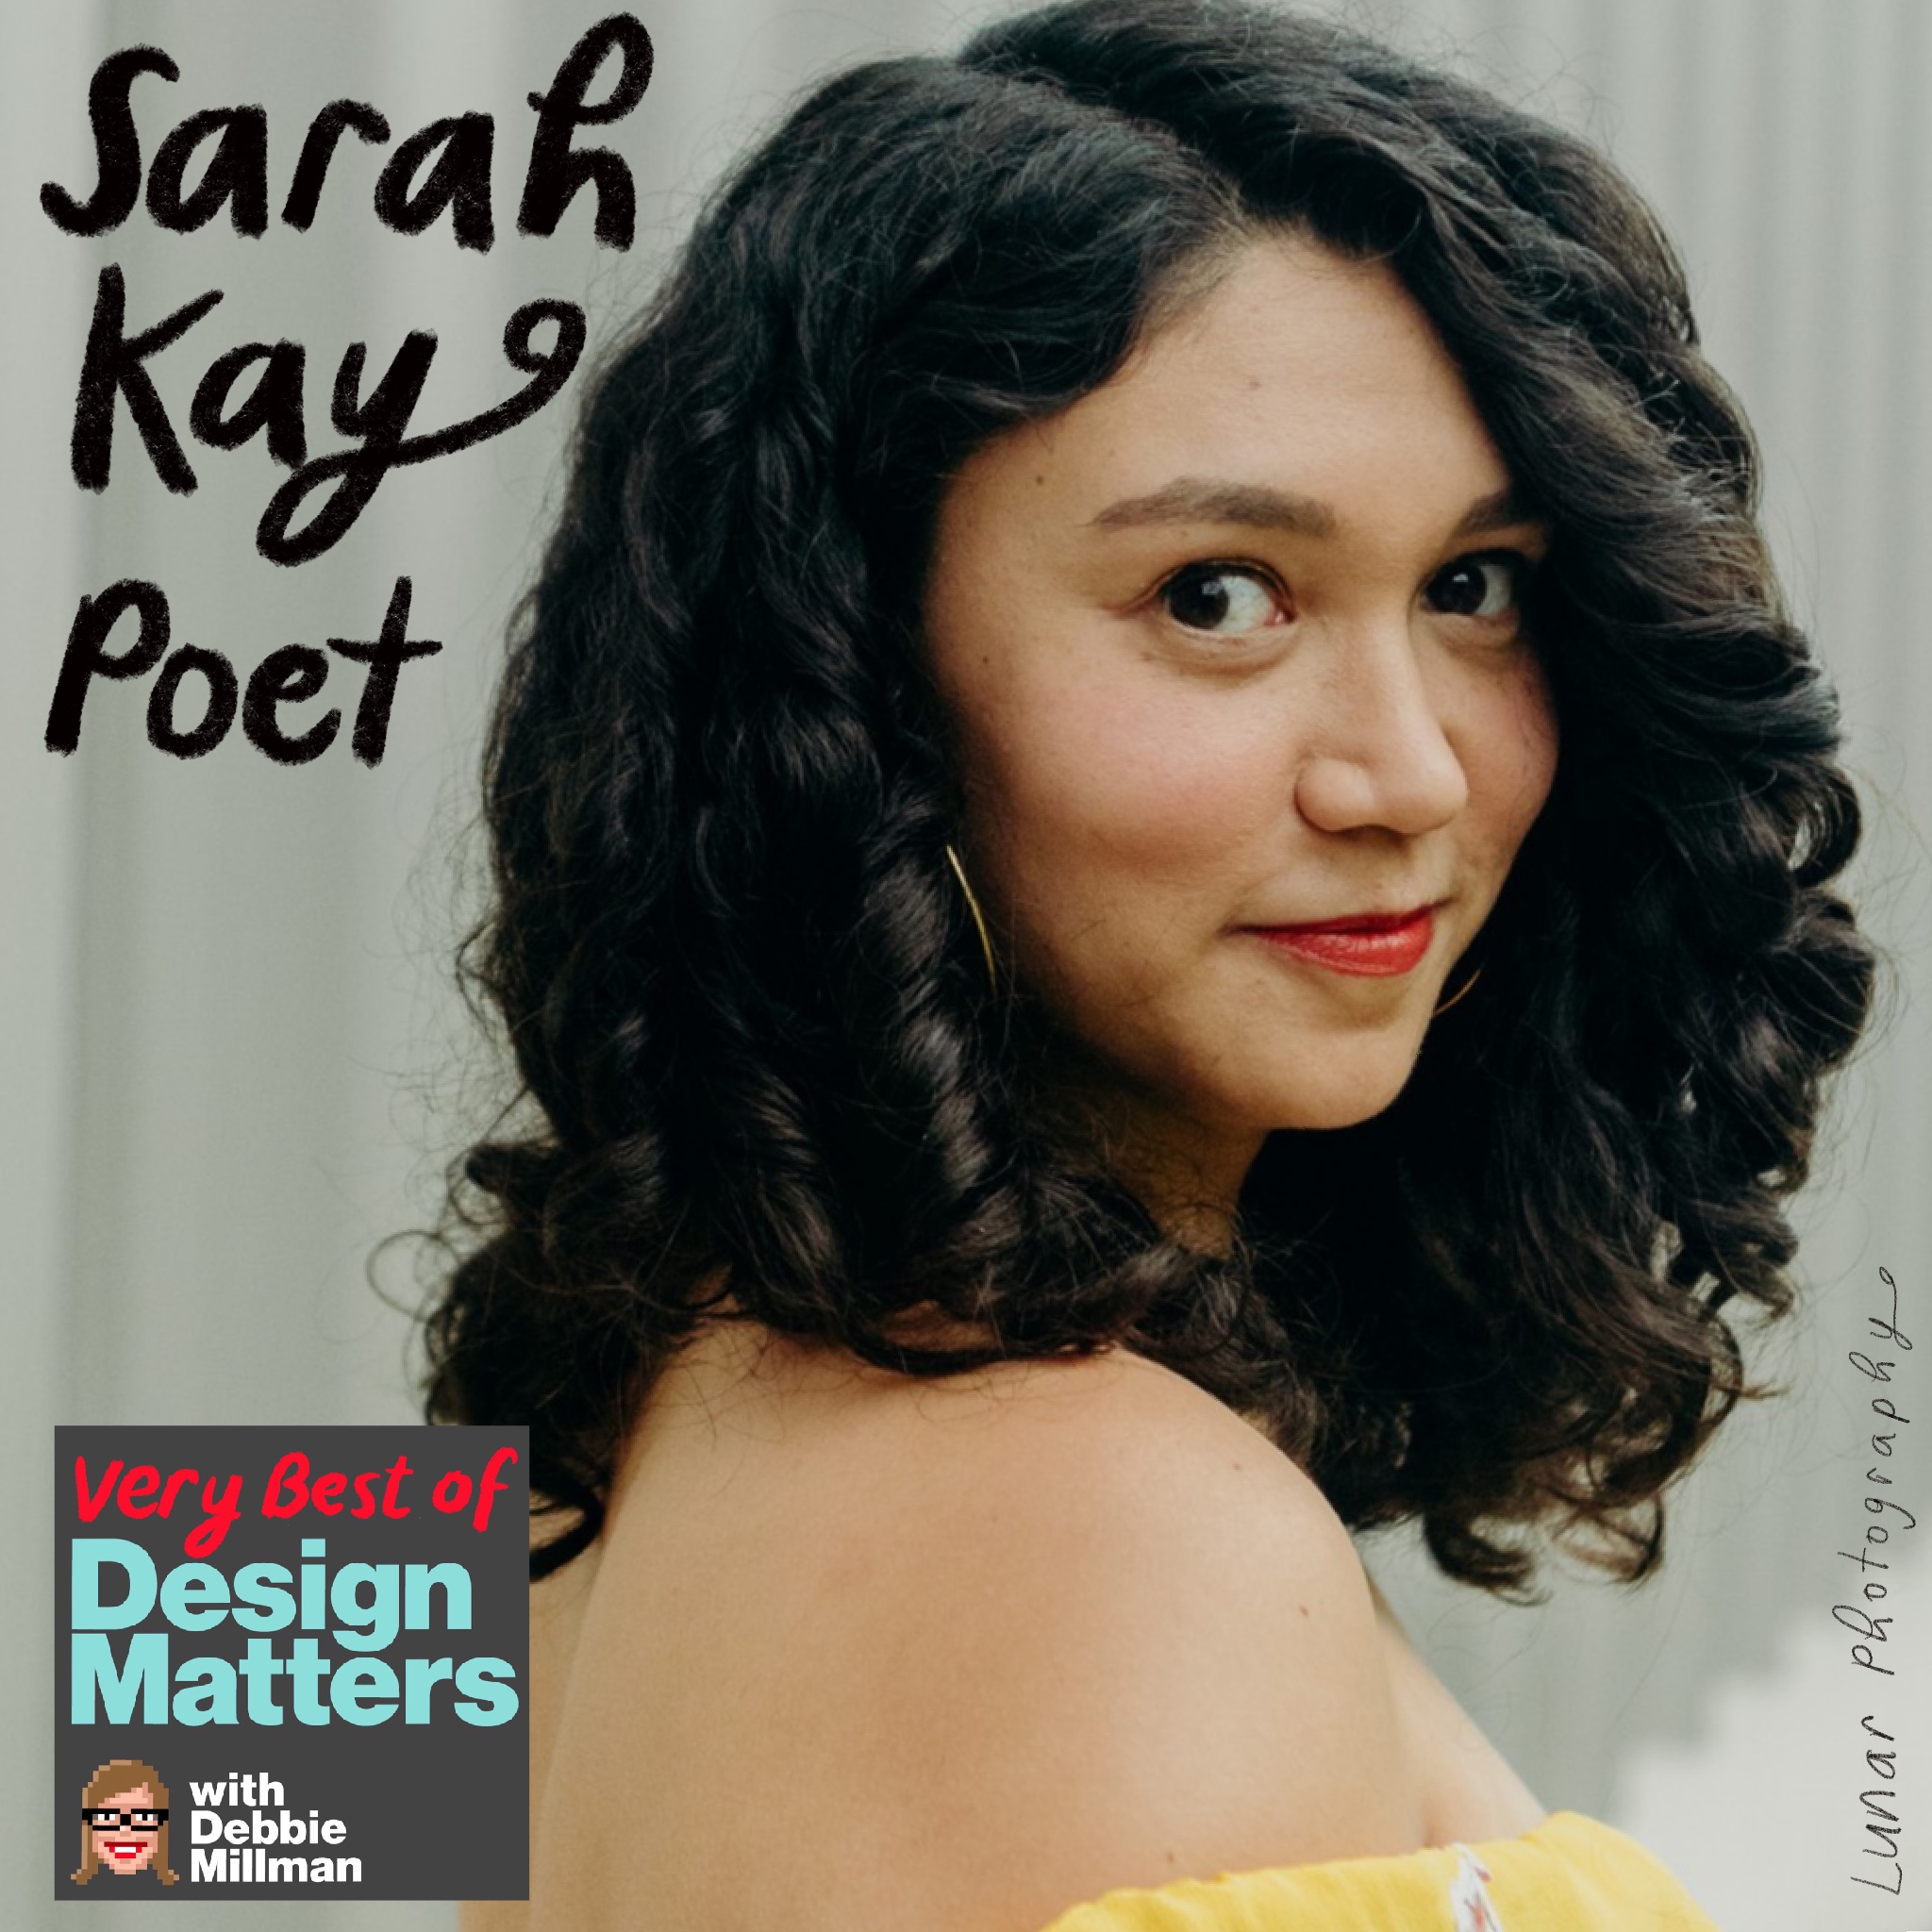 Best of Design Matters: Sarah Kay